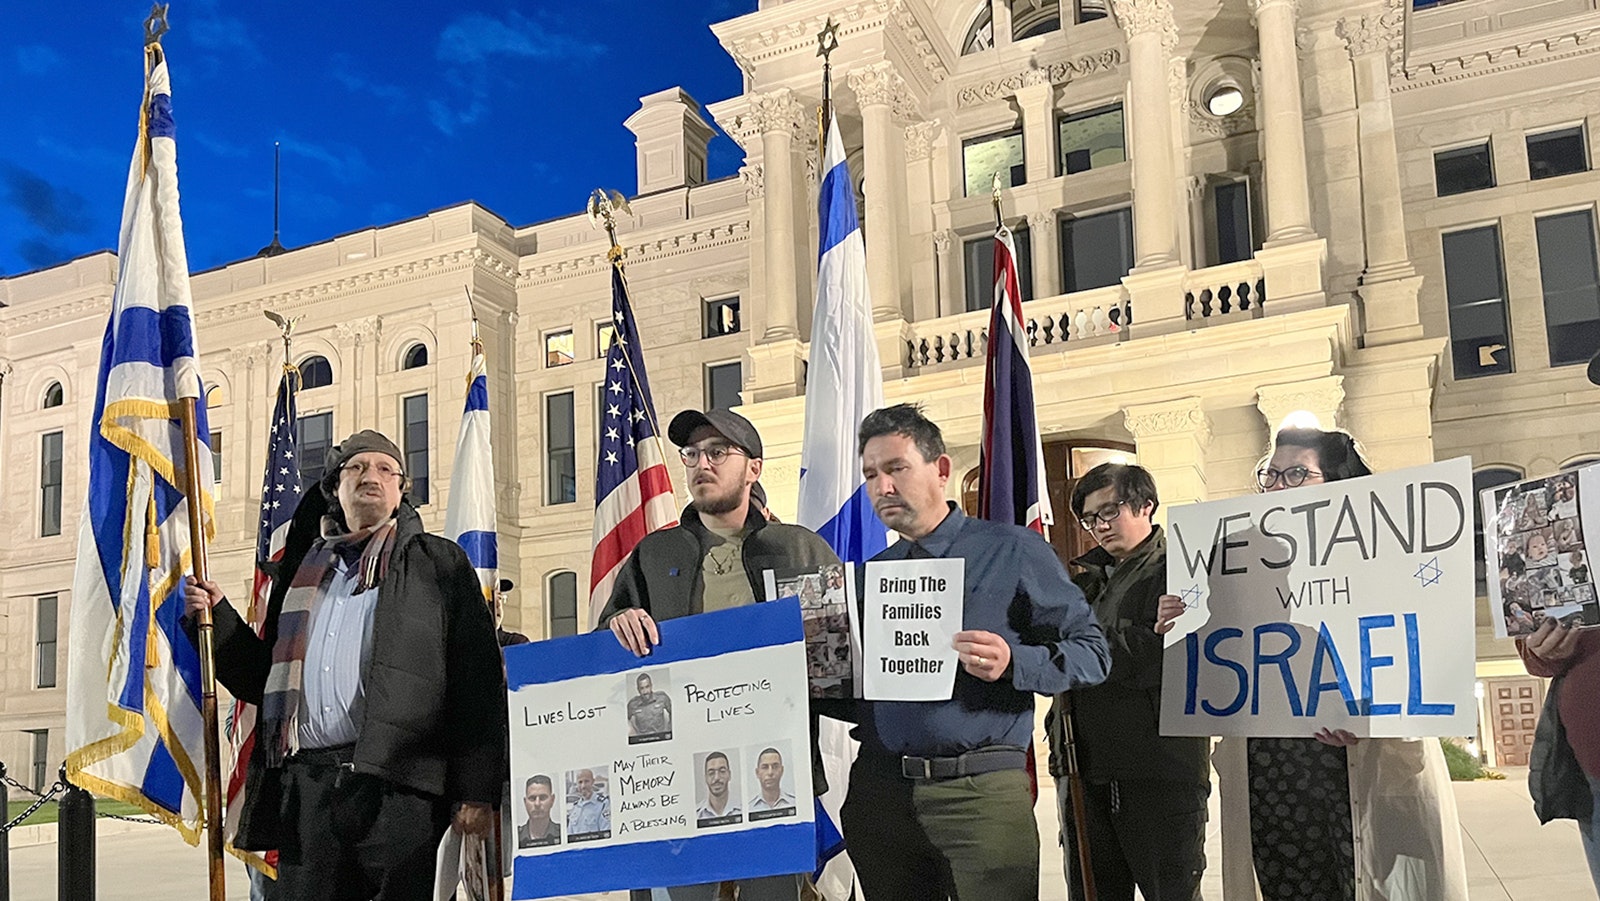 Rabbi Moshe Halfon, from left, Matani Ravenna and Noam Mantaka speak during Monday's peaceful vigil at the Wyoming Capitol in response to the Hamas attack on Israel.